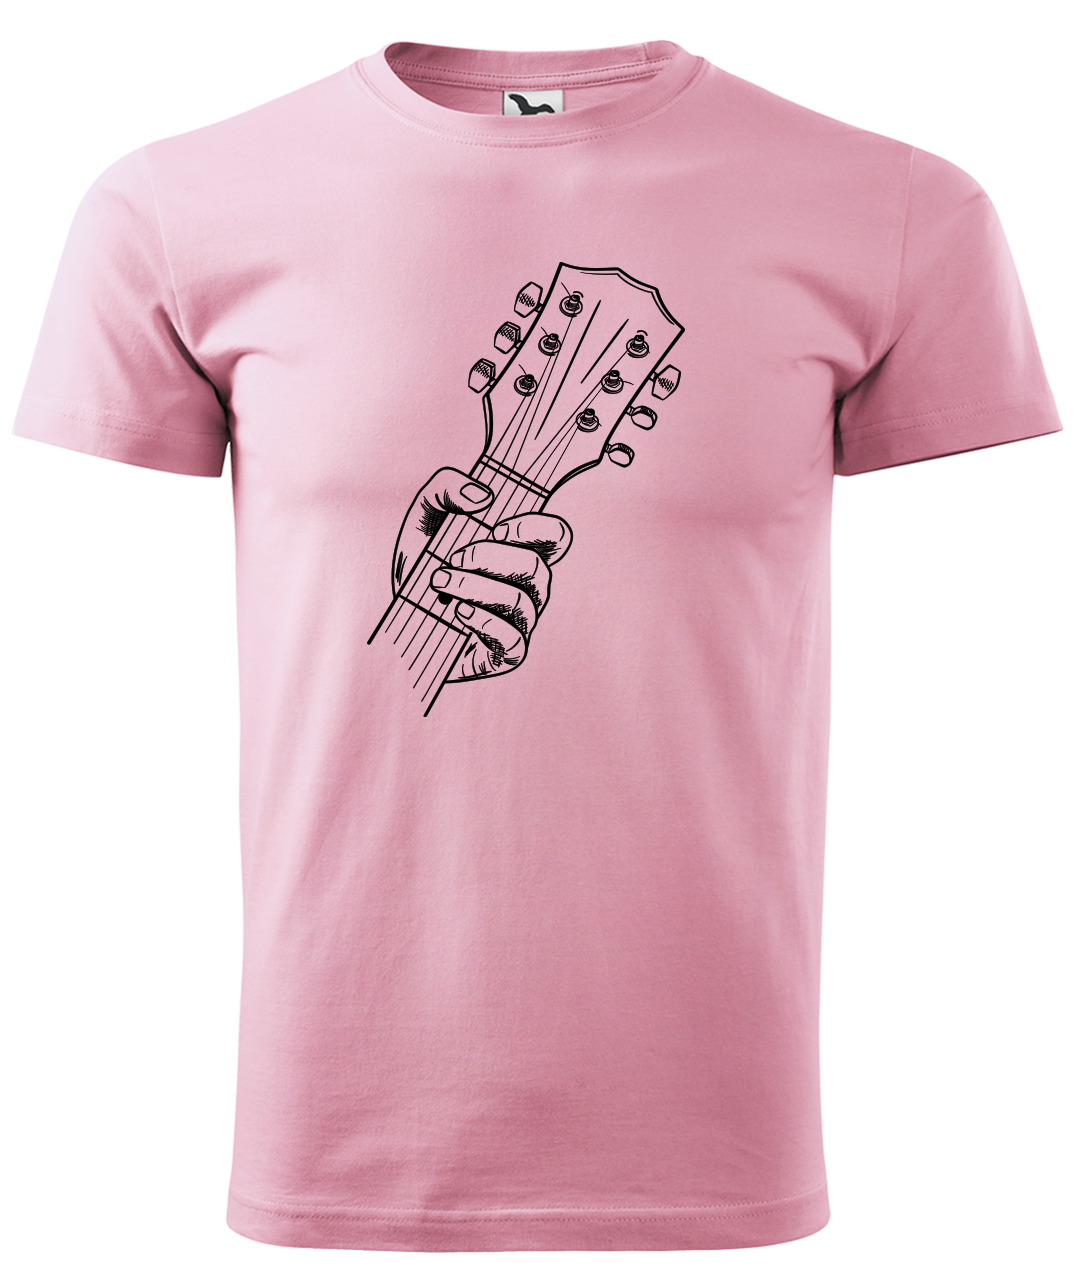 Dětské tričko s kytarou - Hlava kytary Velikost: 4 roky / 110 cm, Barva: Růžová (30)